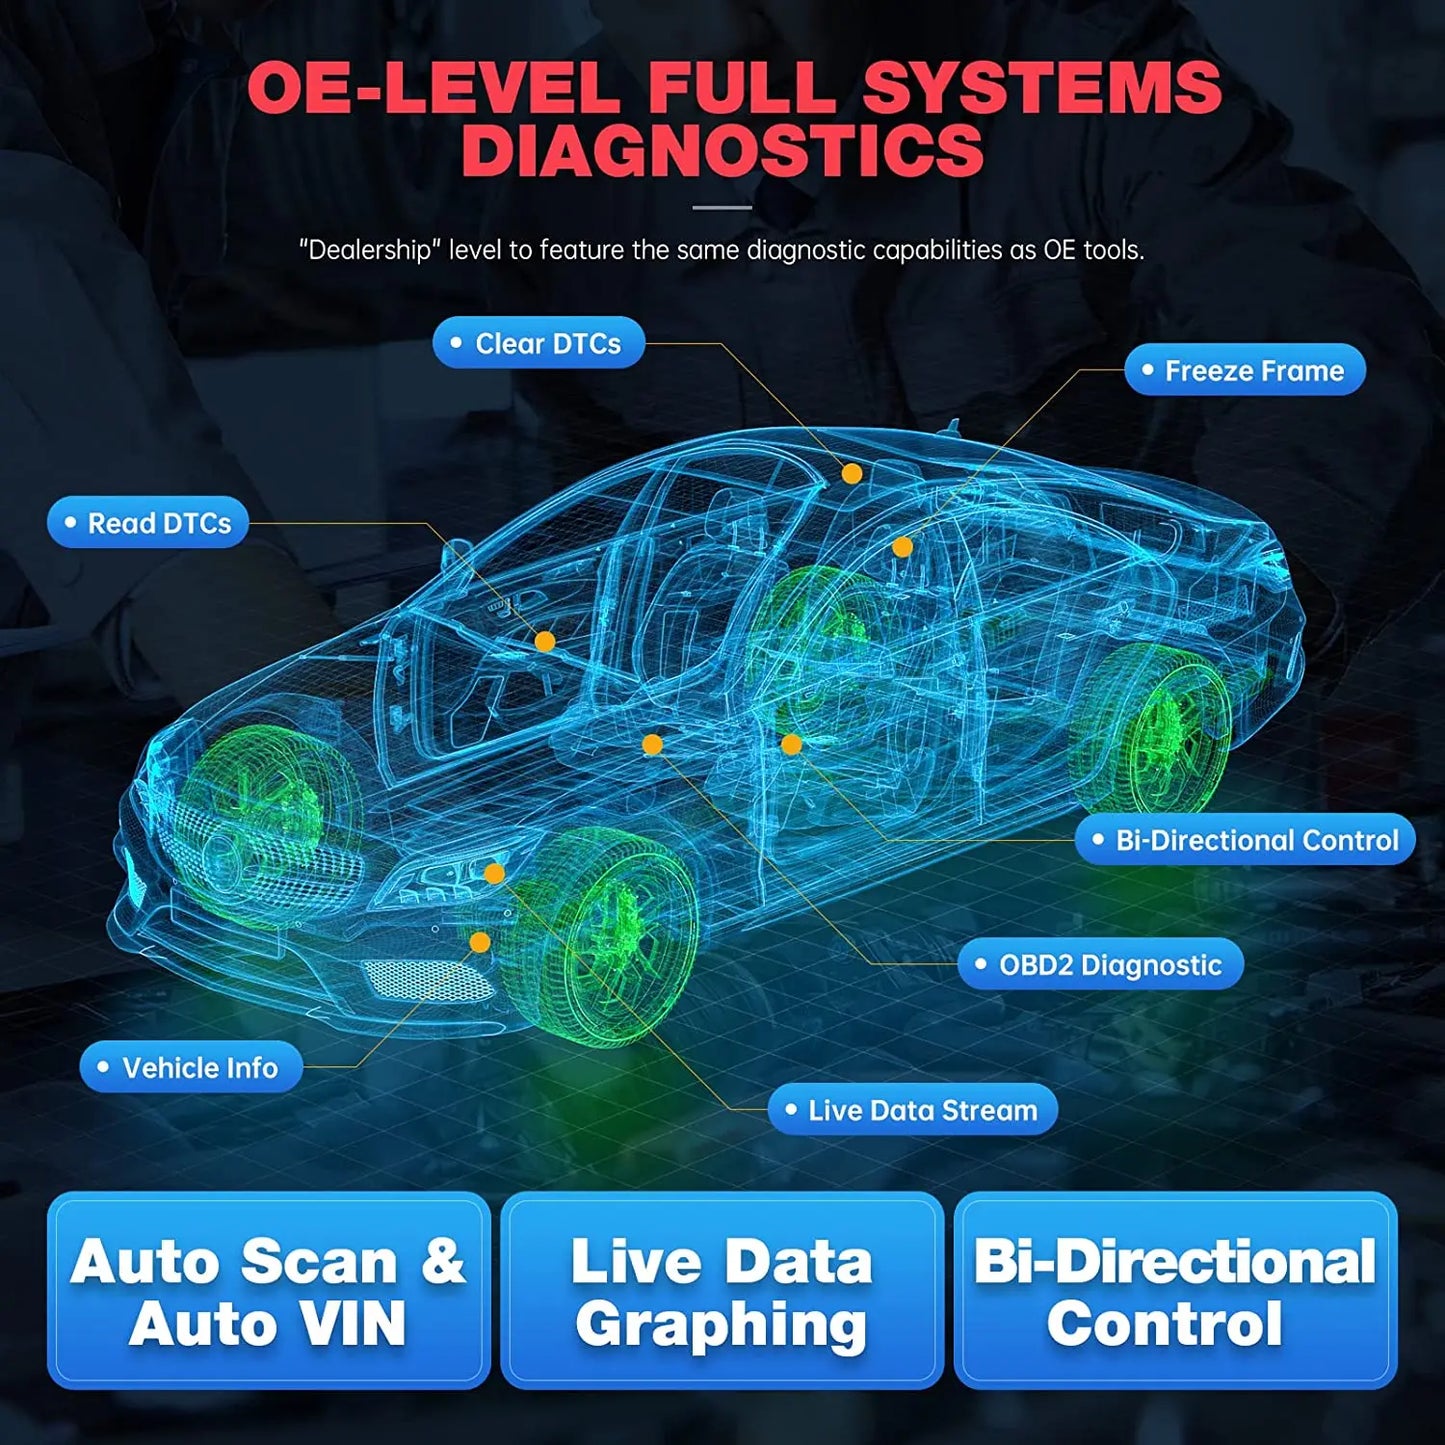 XTOOL D8 BT Car Diagnostic Tools OBD2 Scanner Full System ECU Coding Active Test Car Key Programming Wireless Automotive Scanner - Dynamex